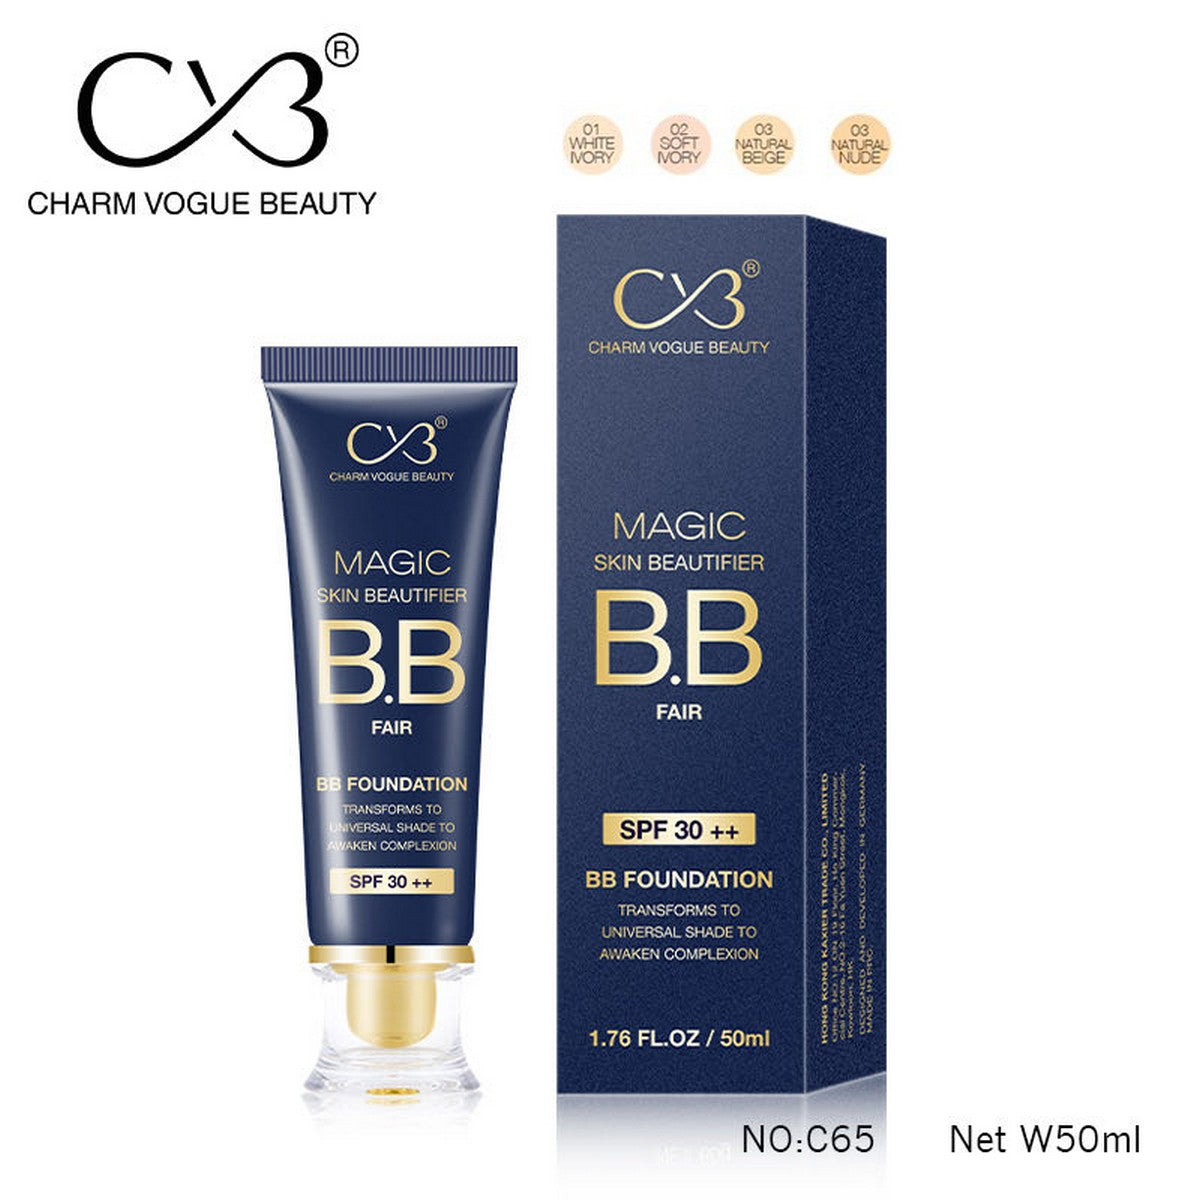 CVB Paris Magic Skin Beautifier Foundation & Sunscreen SPF 30++